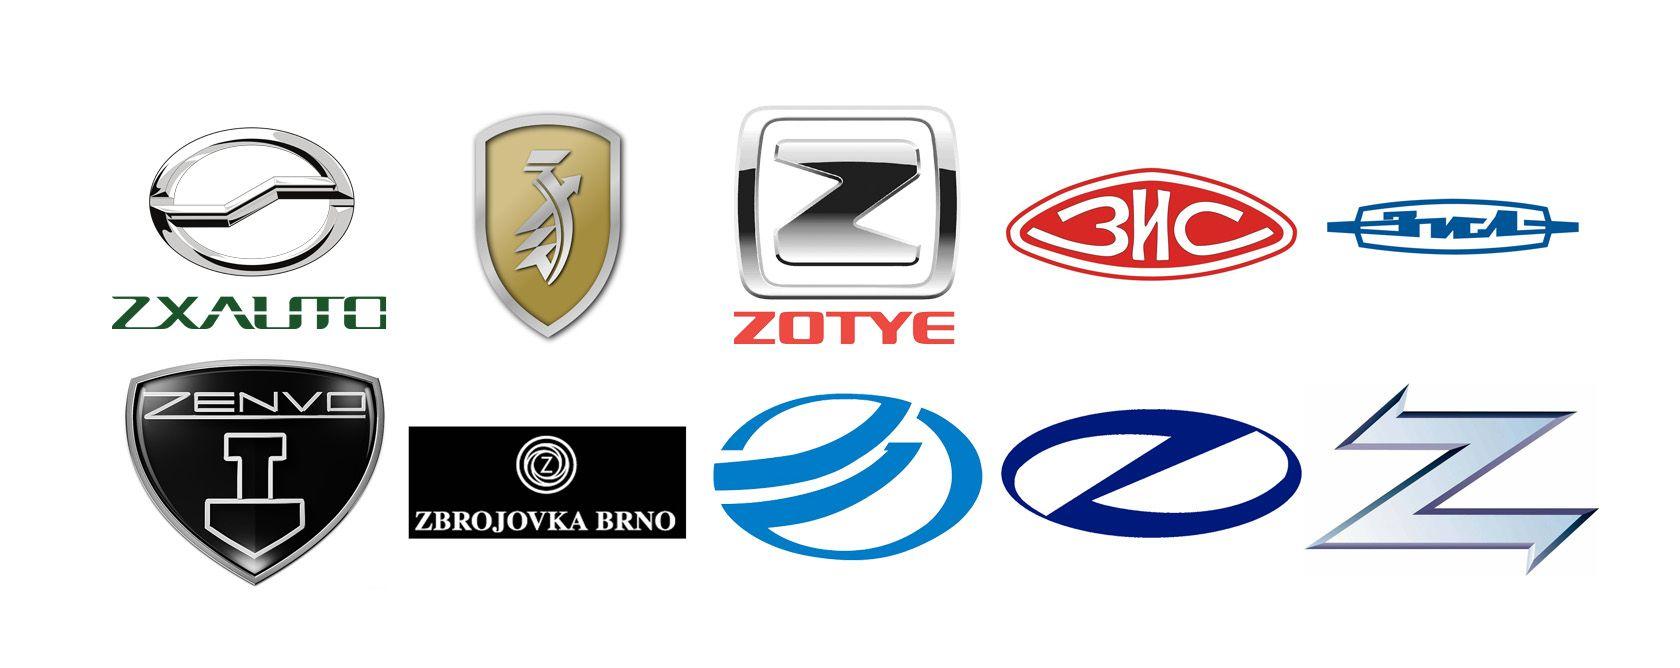 Z Car Company Logo - Car brands with A-Z | World Cars Brands